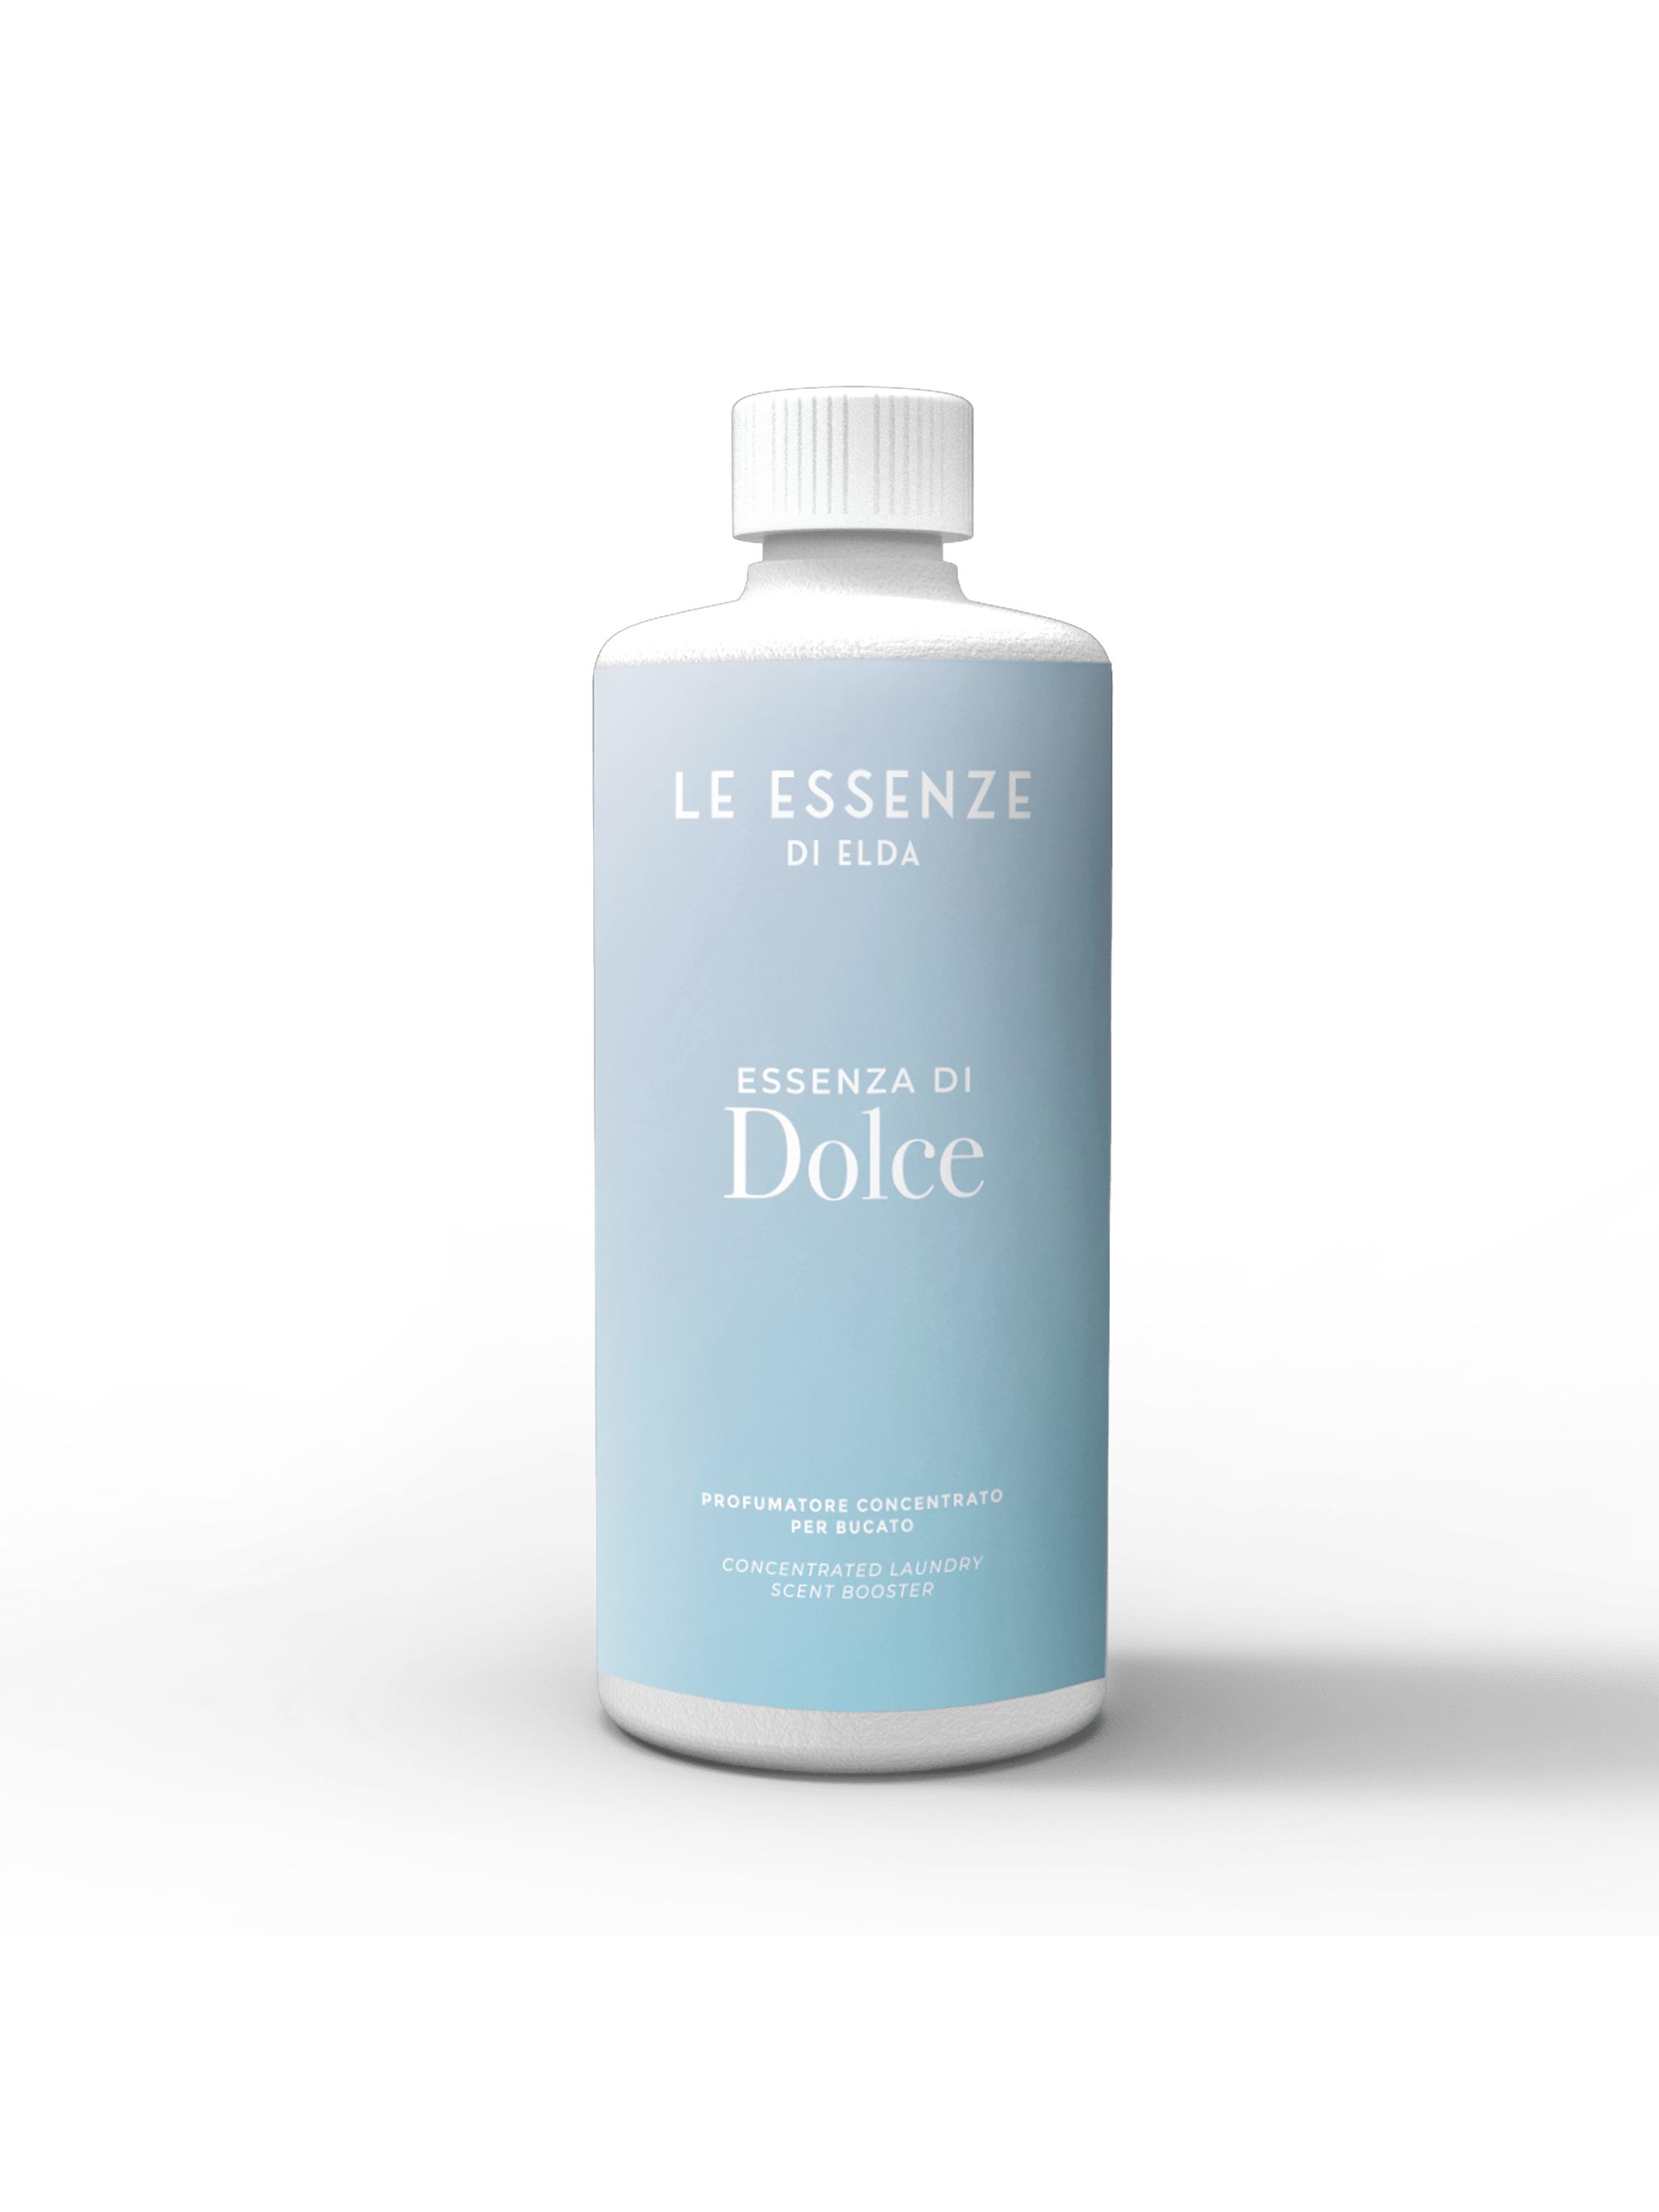 Essenza Dolce - 500ml laundry perfumer